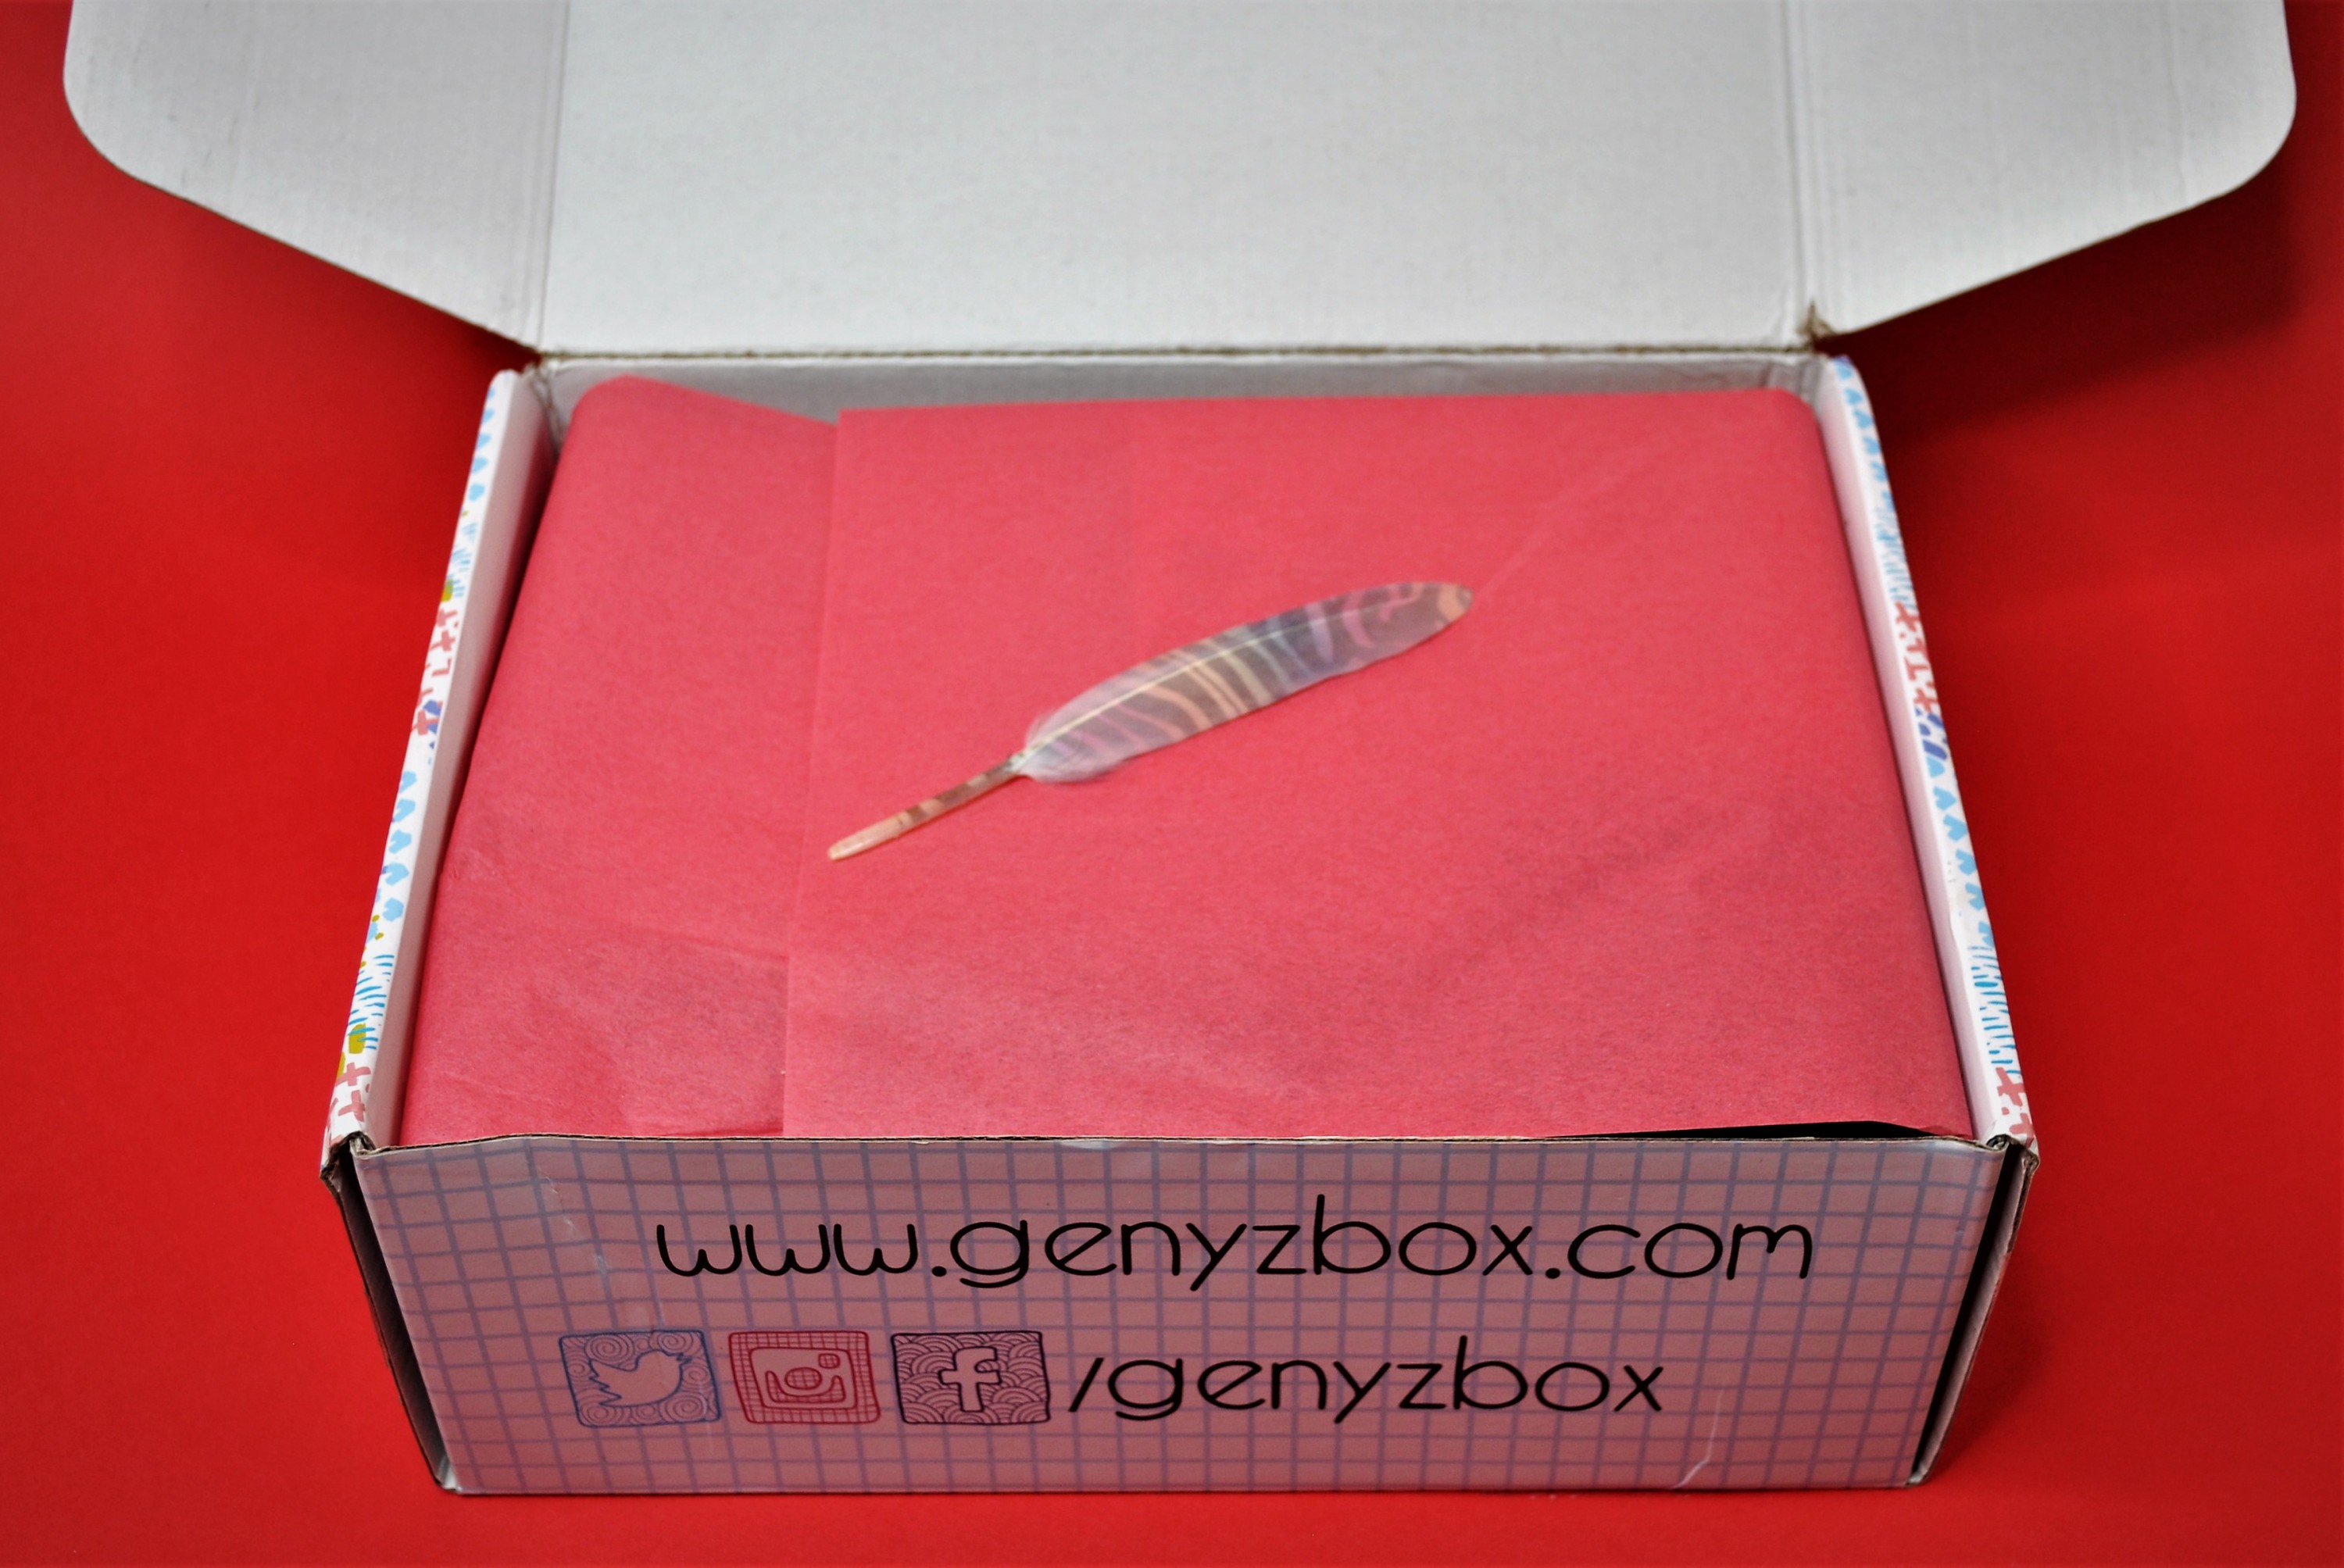 Gen YZ Box; GENYZ BOX; GenYZ; Box Subscription; subscription box; tweens; teens;